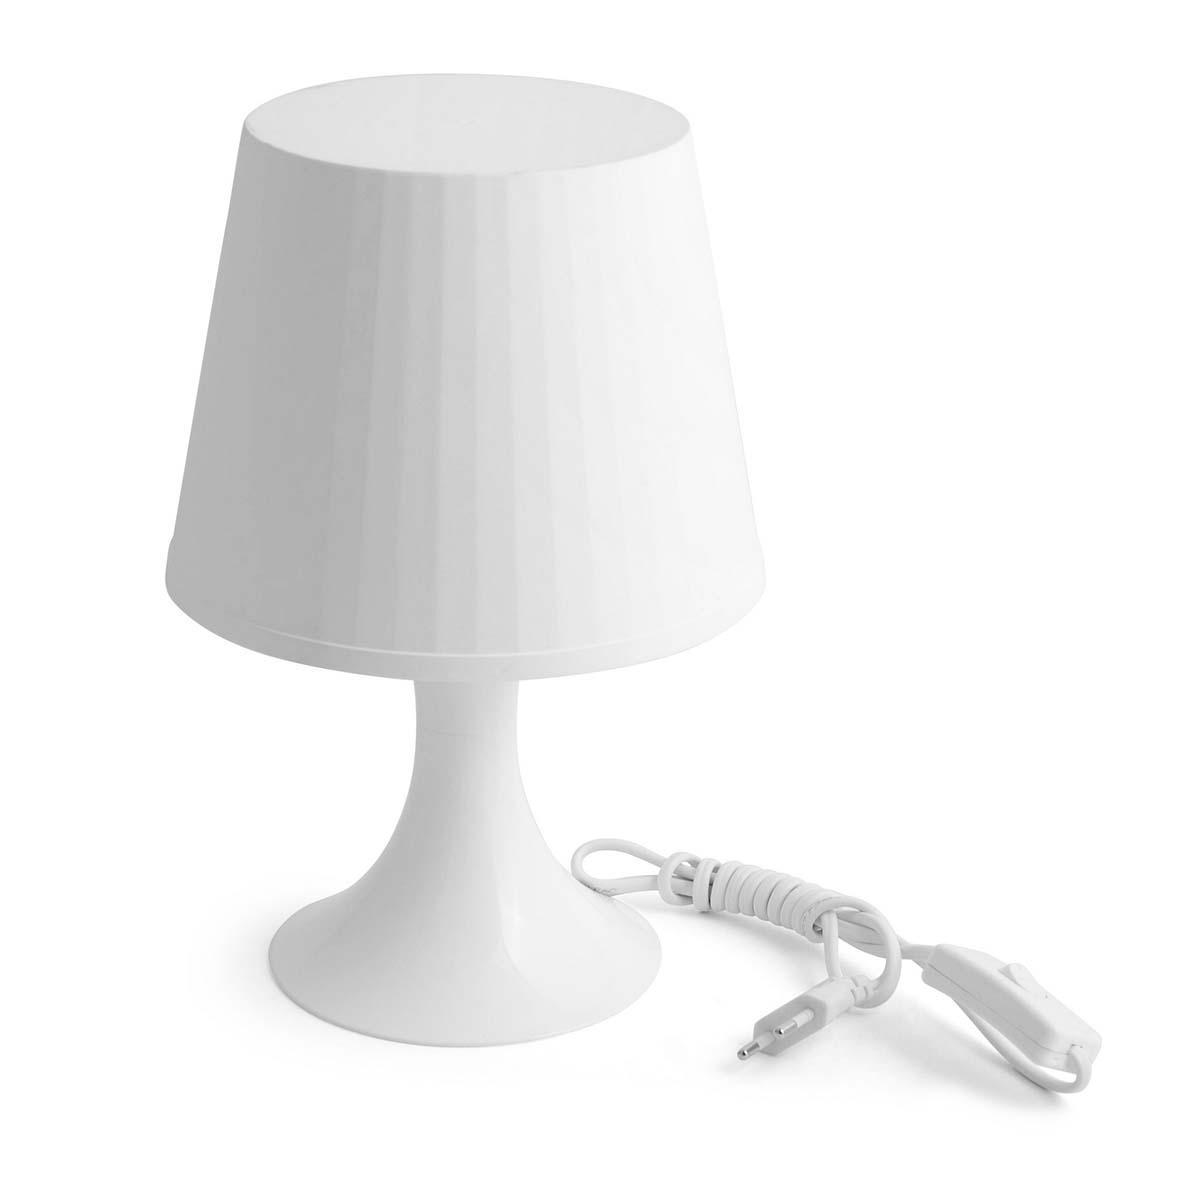 Настольная лампа Apeyron 12-117 лампа энергосберегающая uniel дуга g23 11 вт свет холодный белый